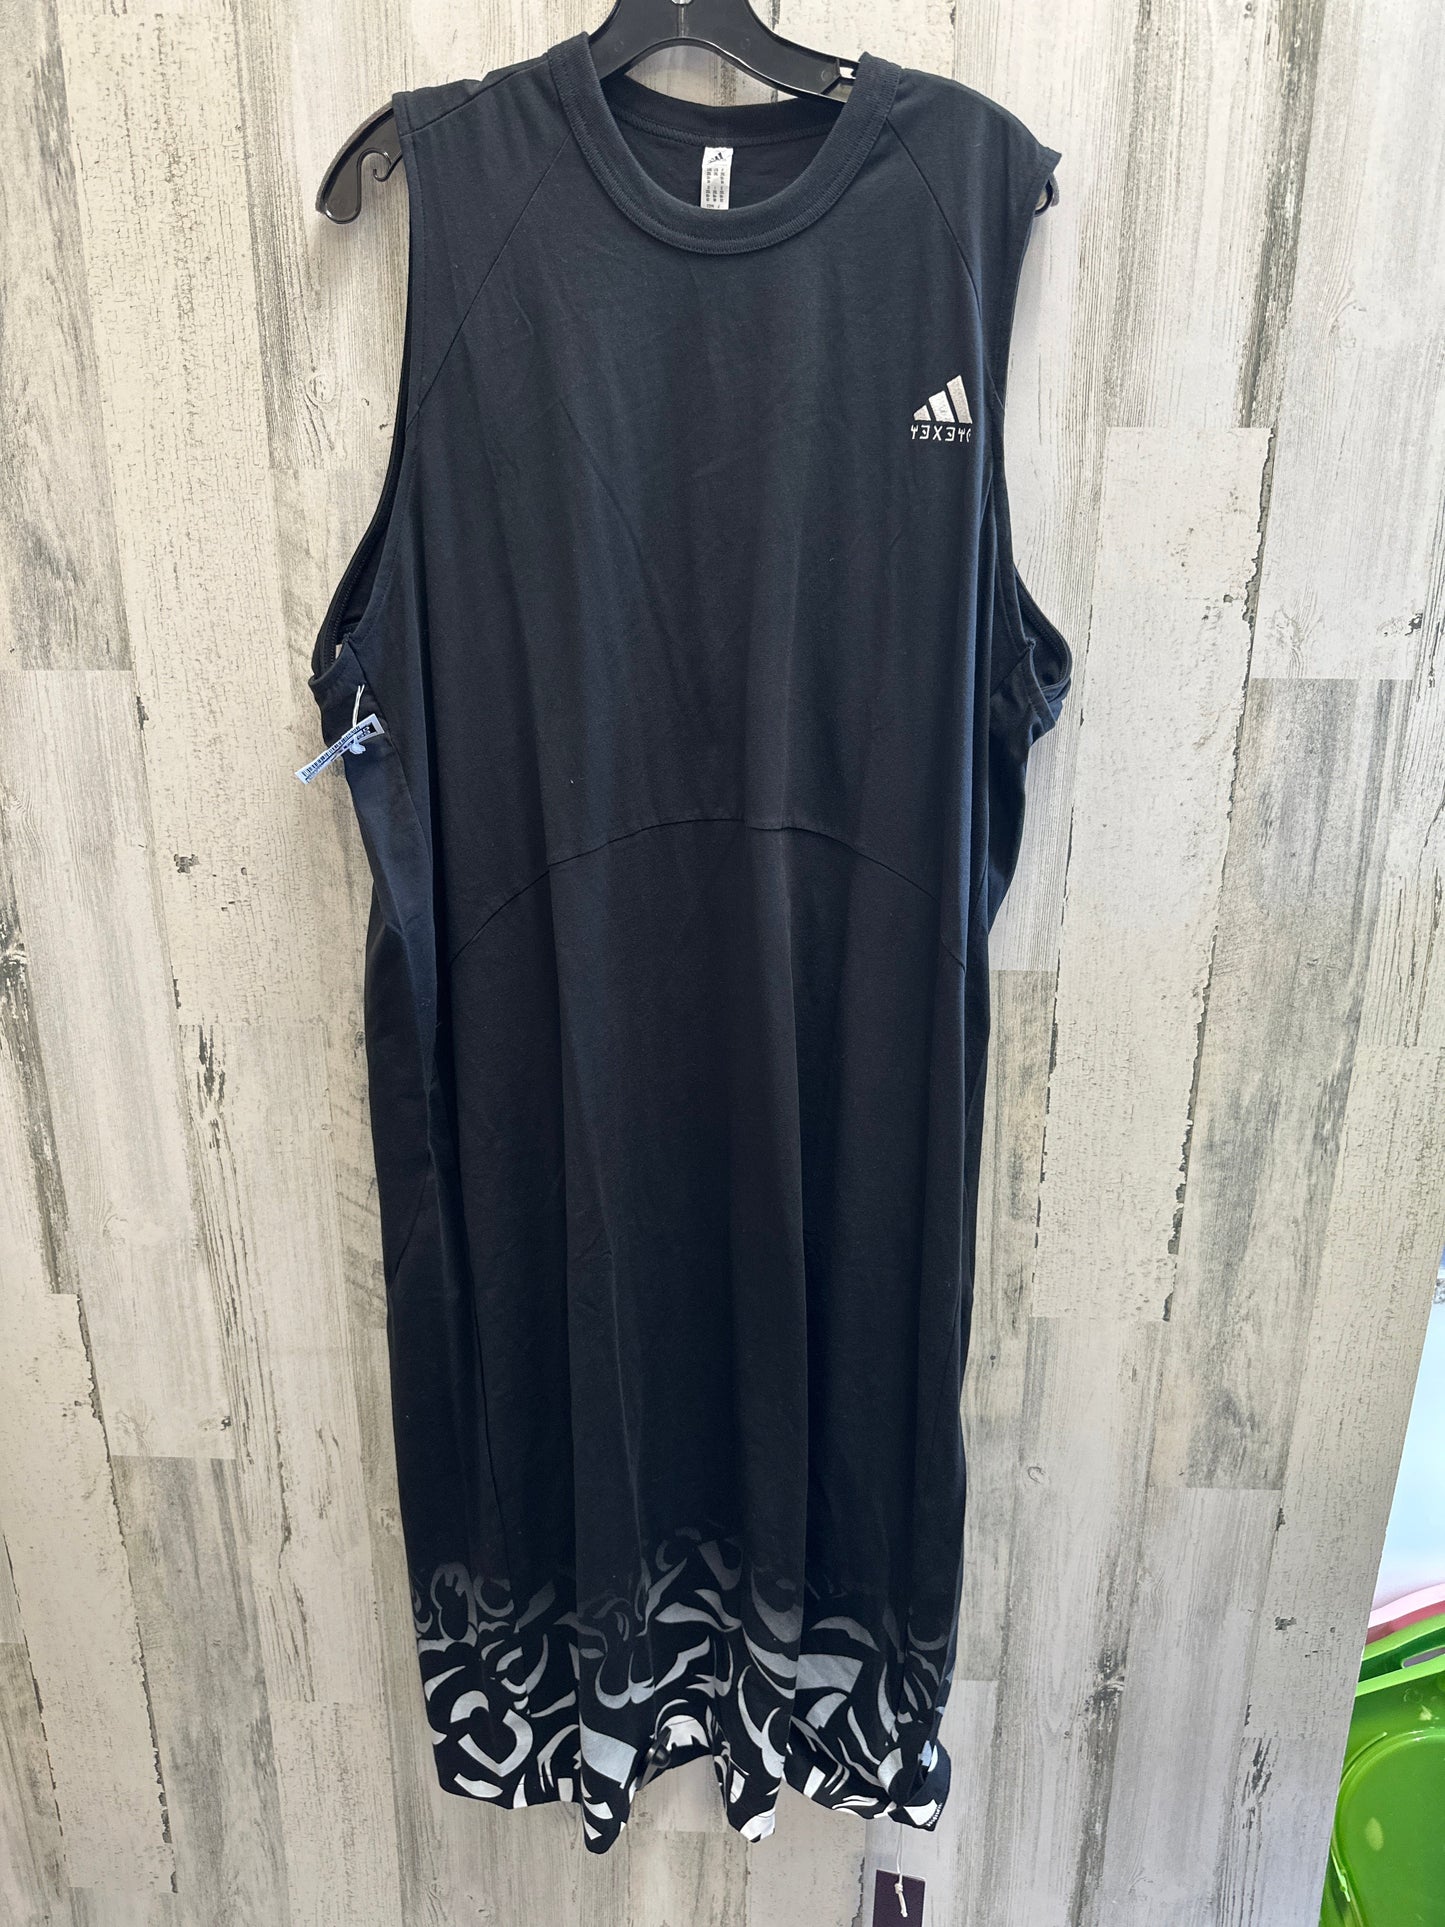 Athletic Dress By Adidas  Size: 2x